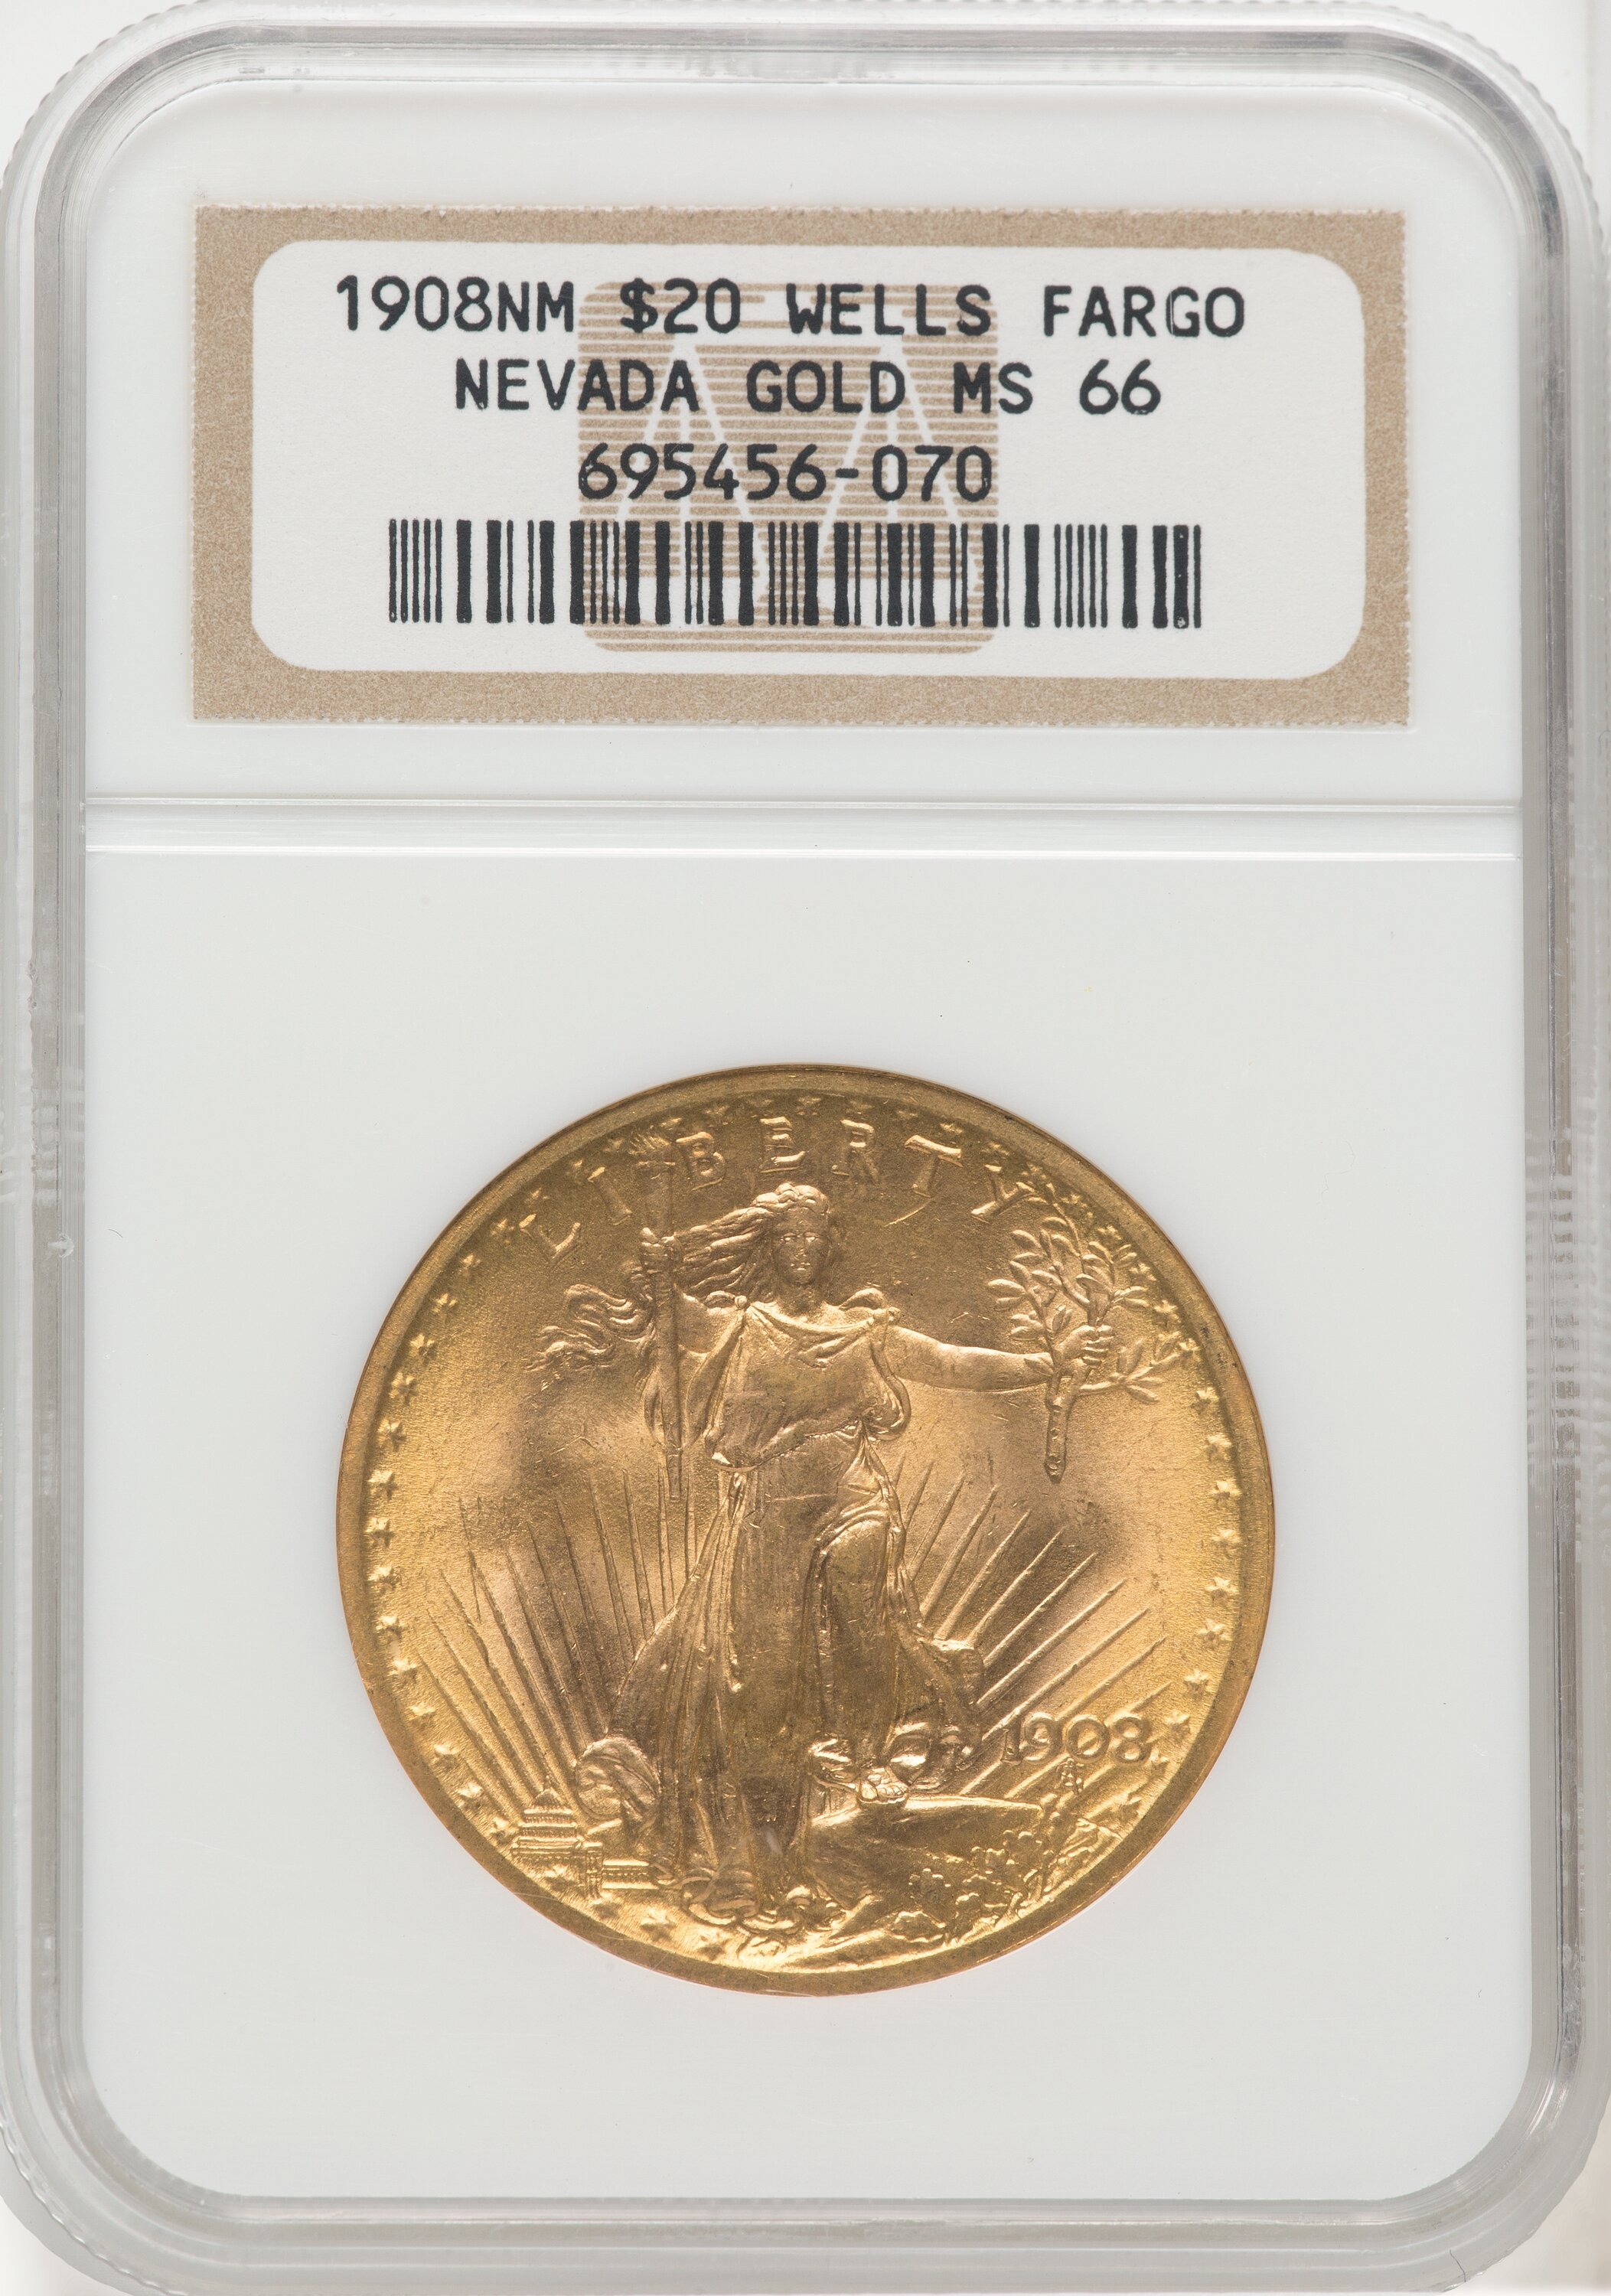 1908 NM $20 Wells Fargo 66 NGC